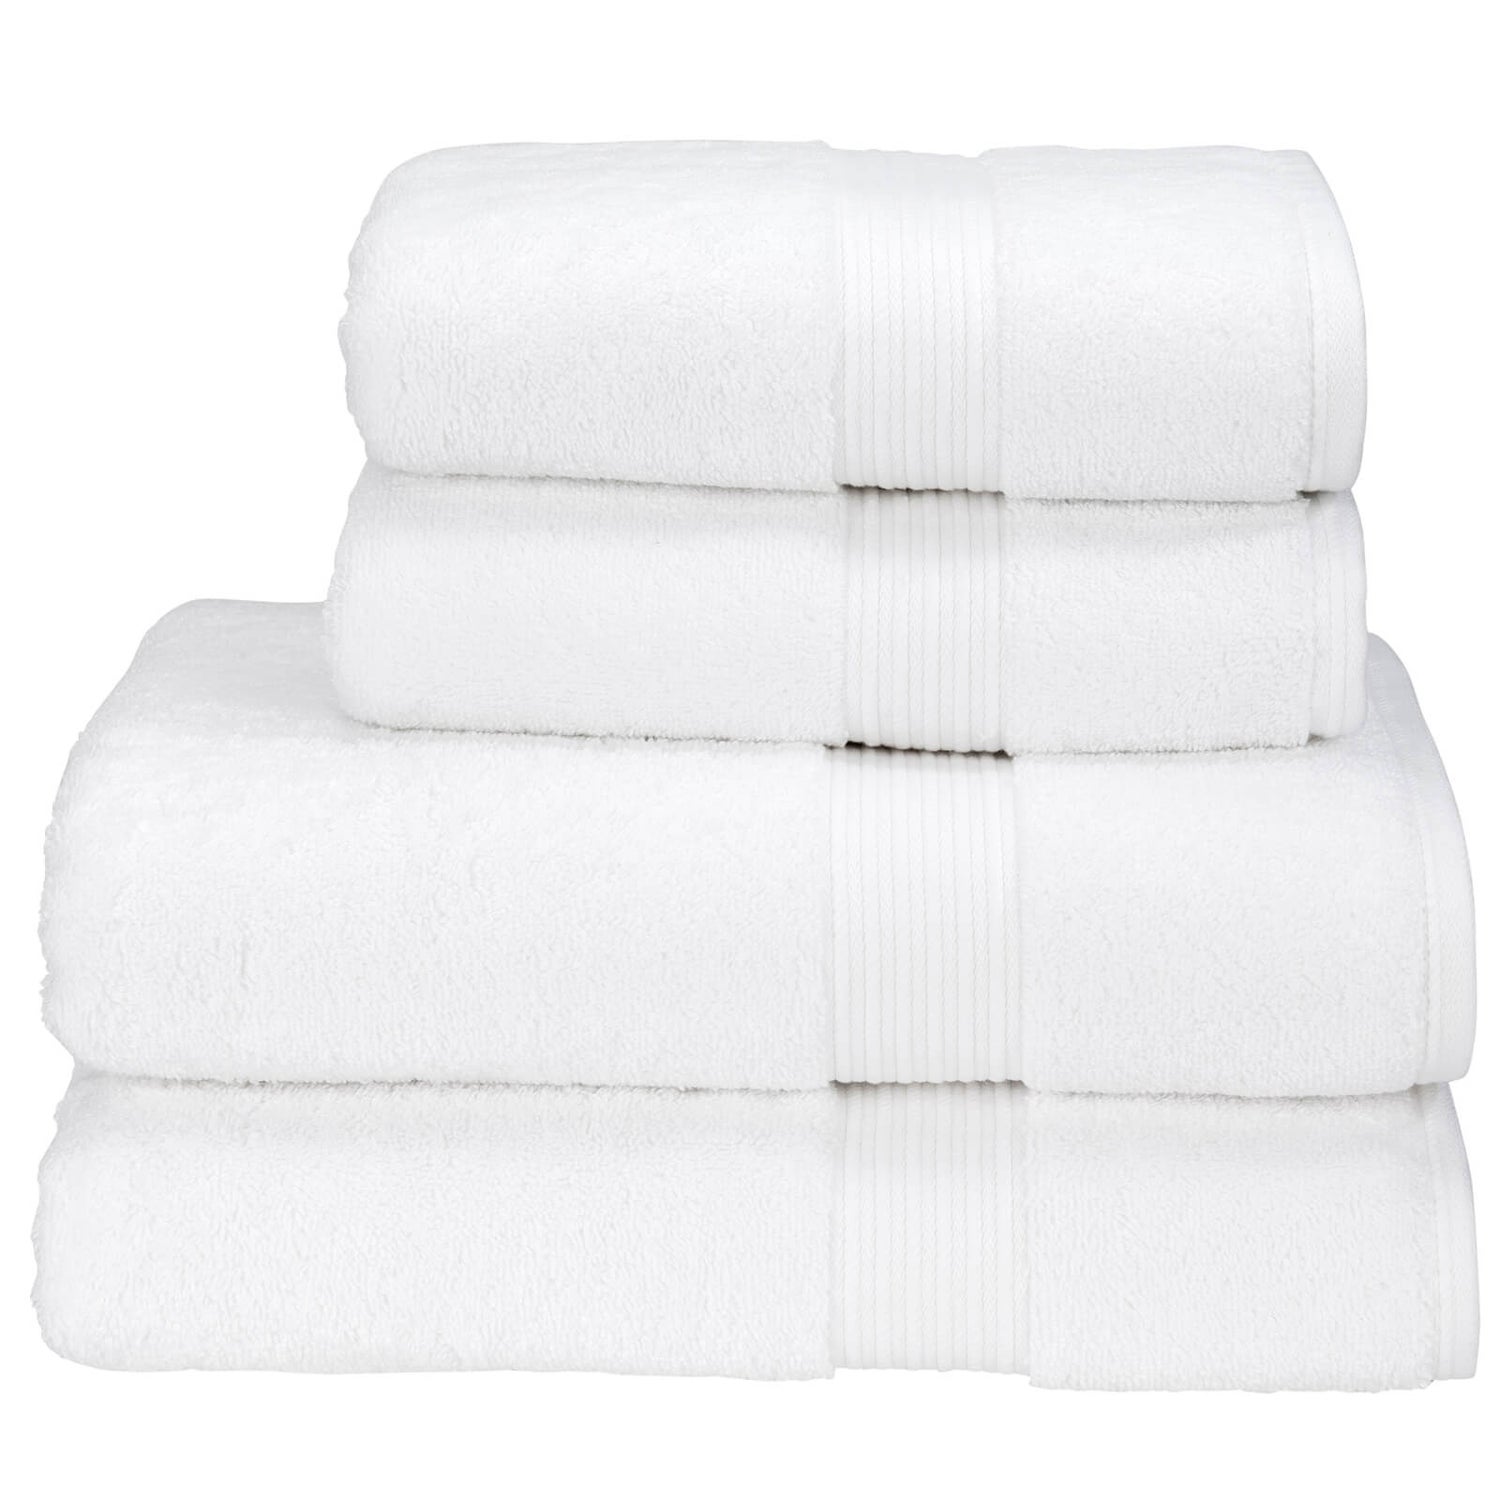 Christy Supreme Hygro Towels - White - Hand Towel (Set of 2)